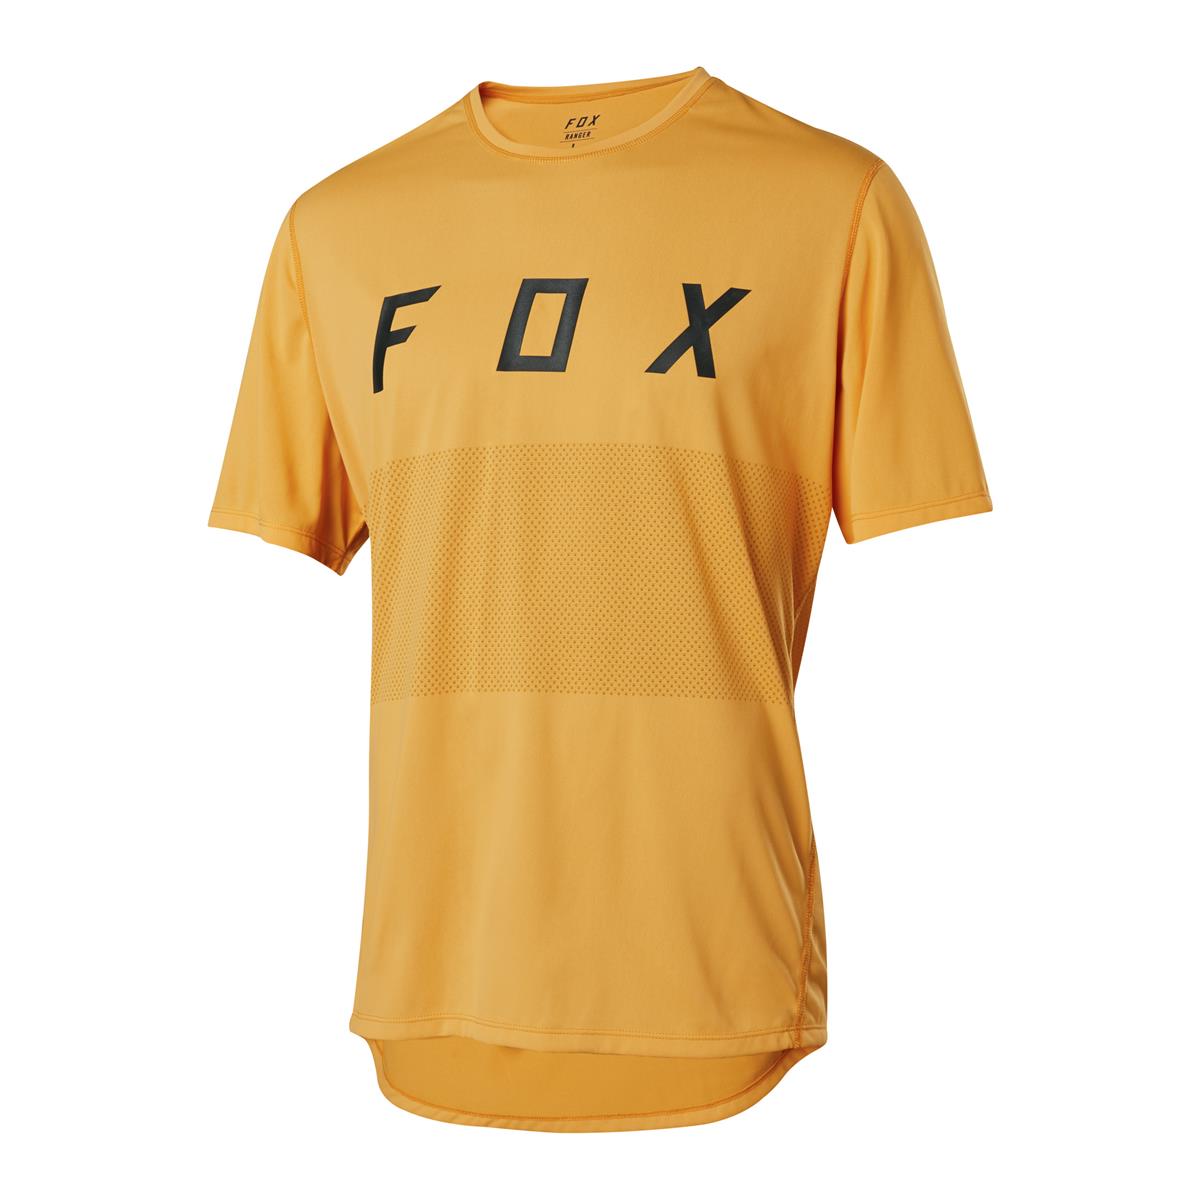 fox mtb jersey orange